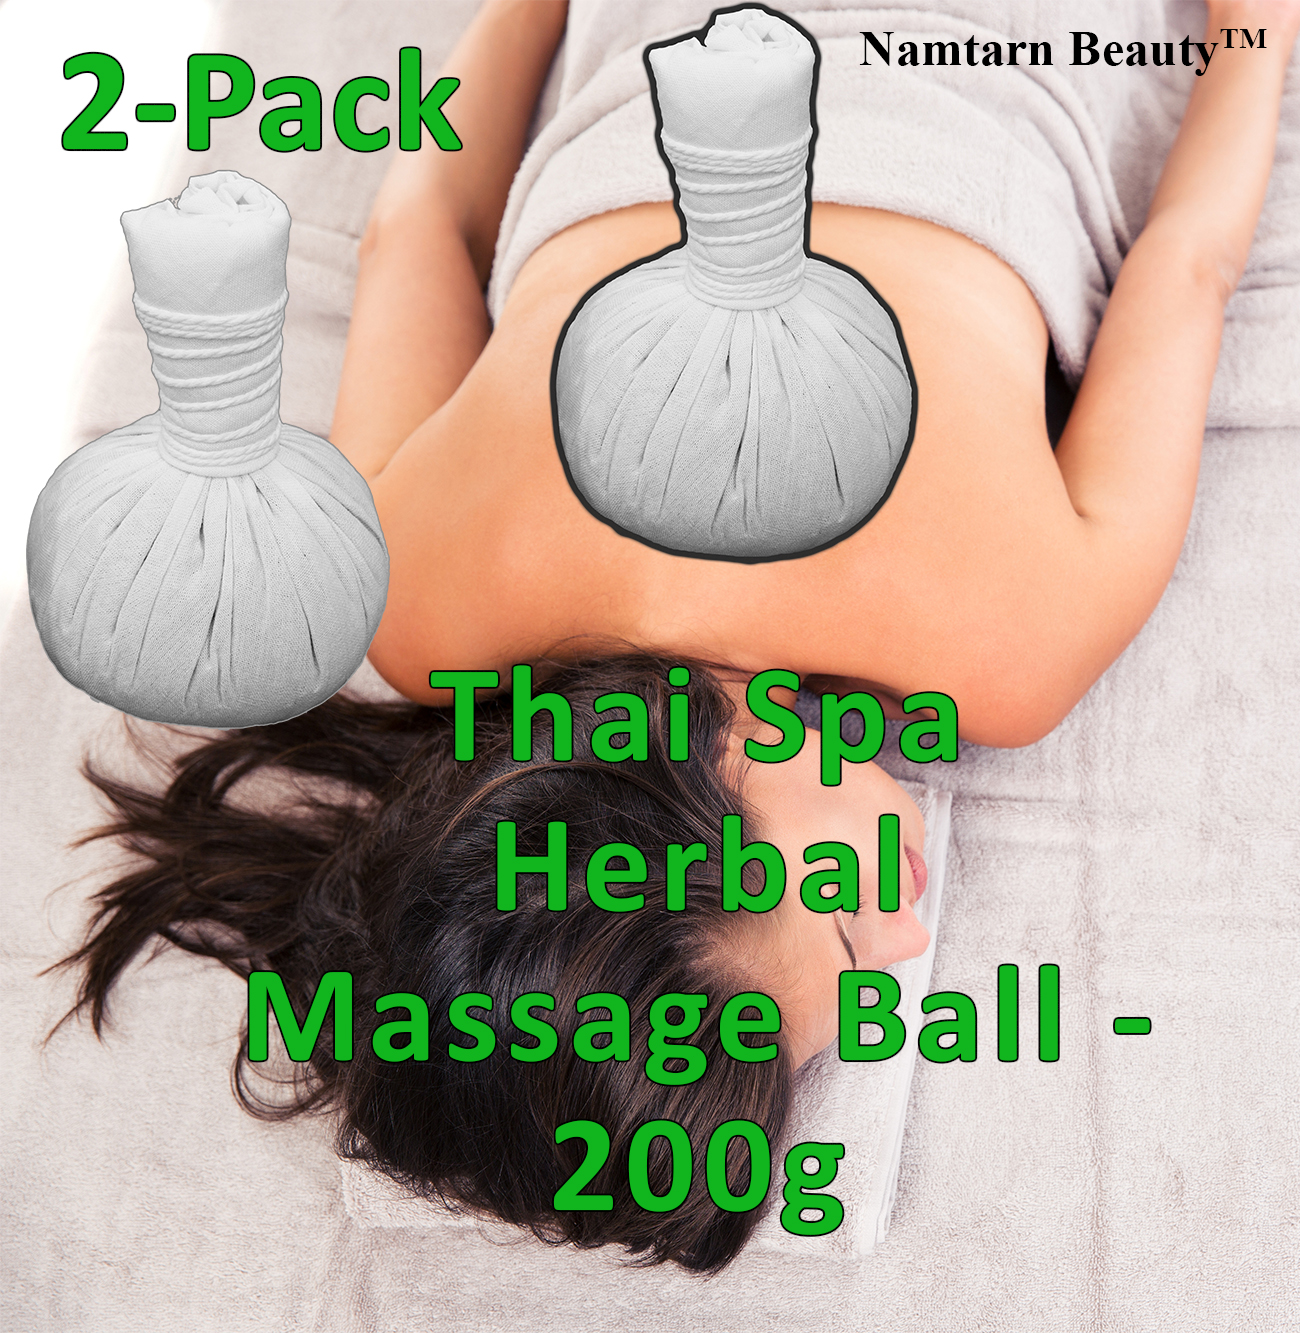 Namtarn Beauty Thai Massage Ball x2 img 1 Woman on Massage Table with product